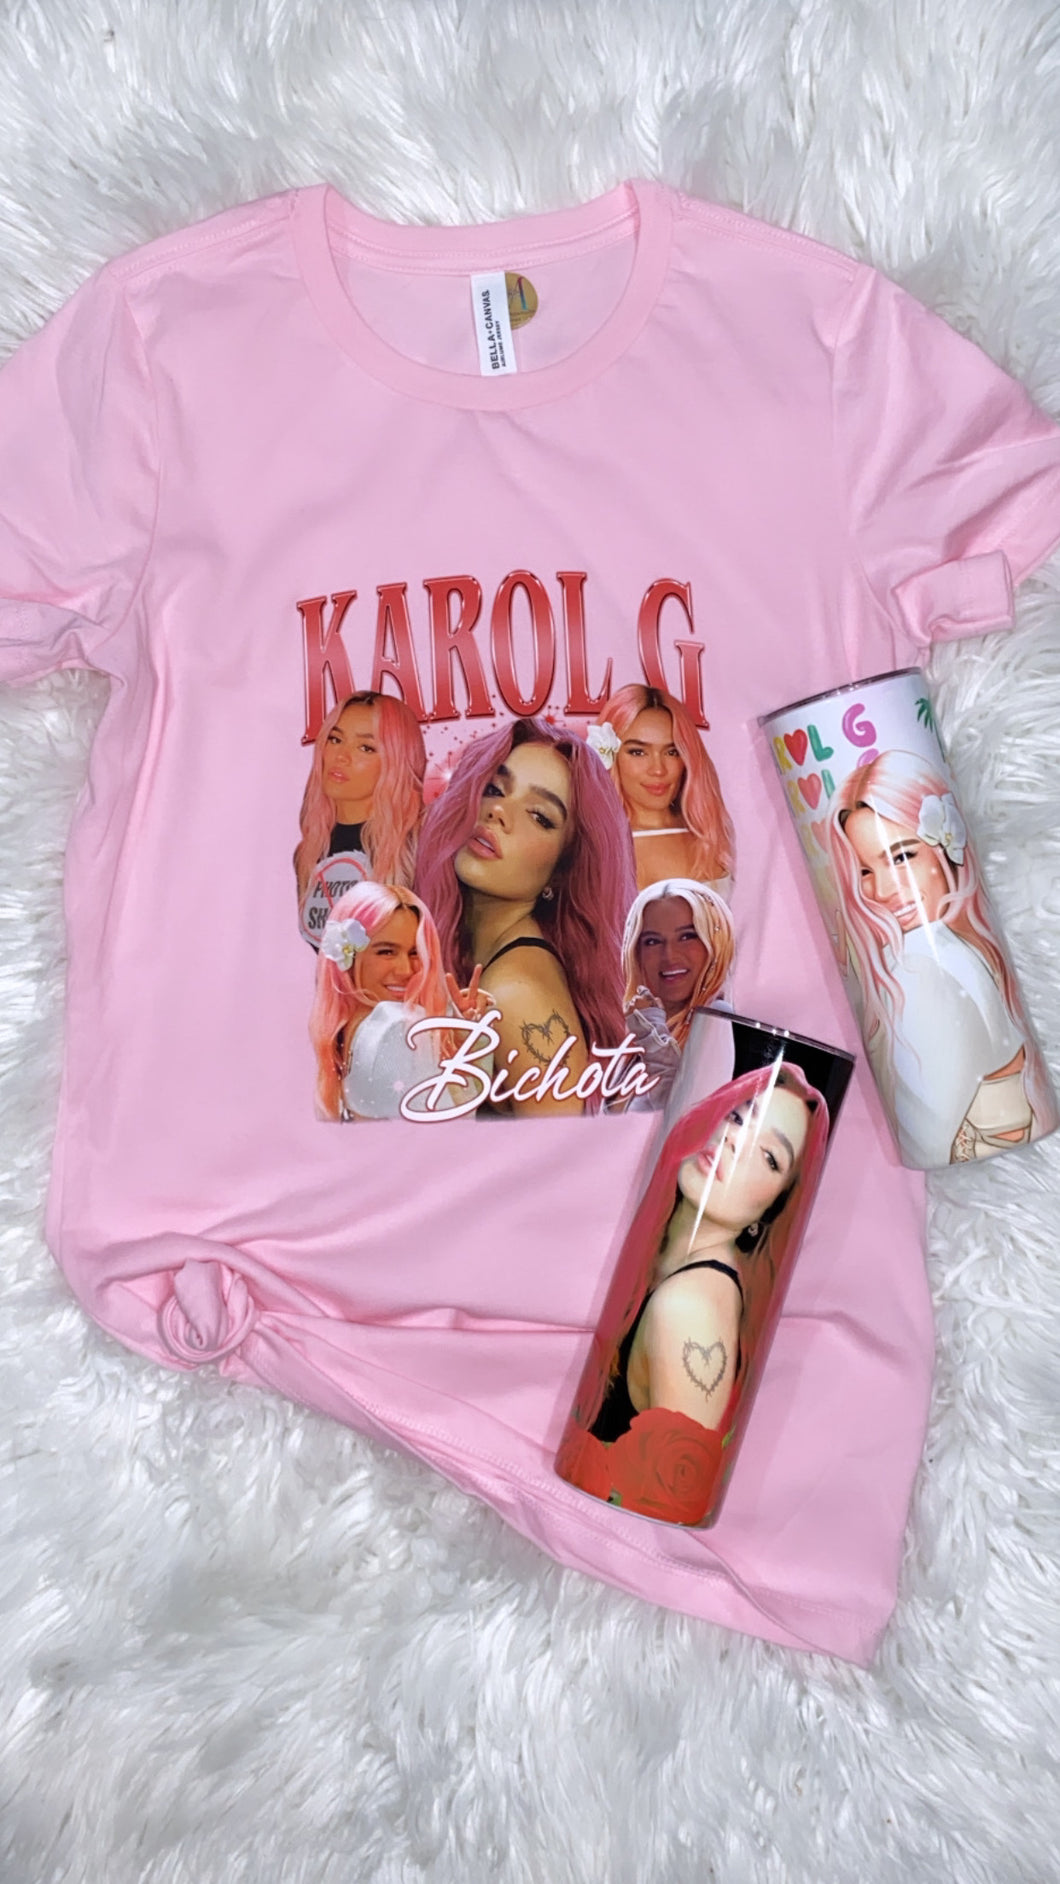 Karol G t-shirt and tumbler